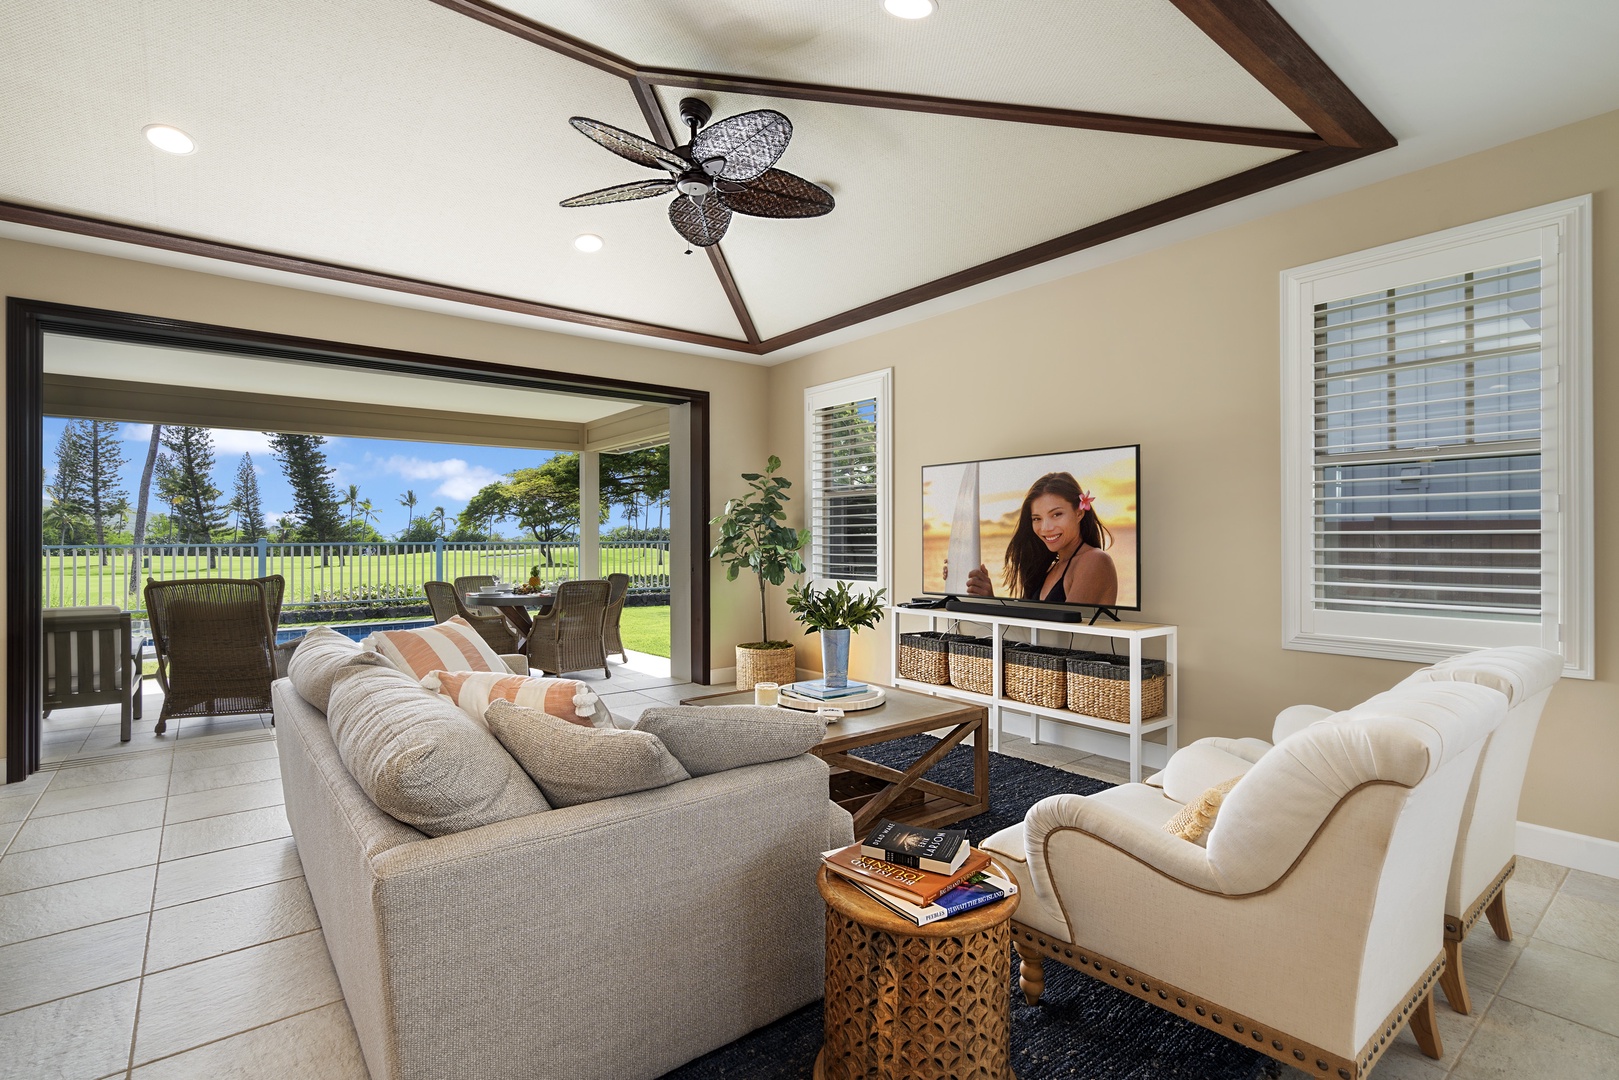 Kailua-Kona Vacation Rentals, Holua Kai #8 - Living room overlooks the Golf Course